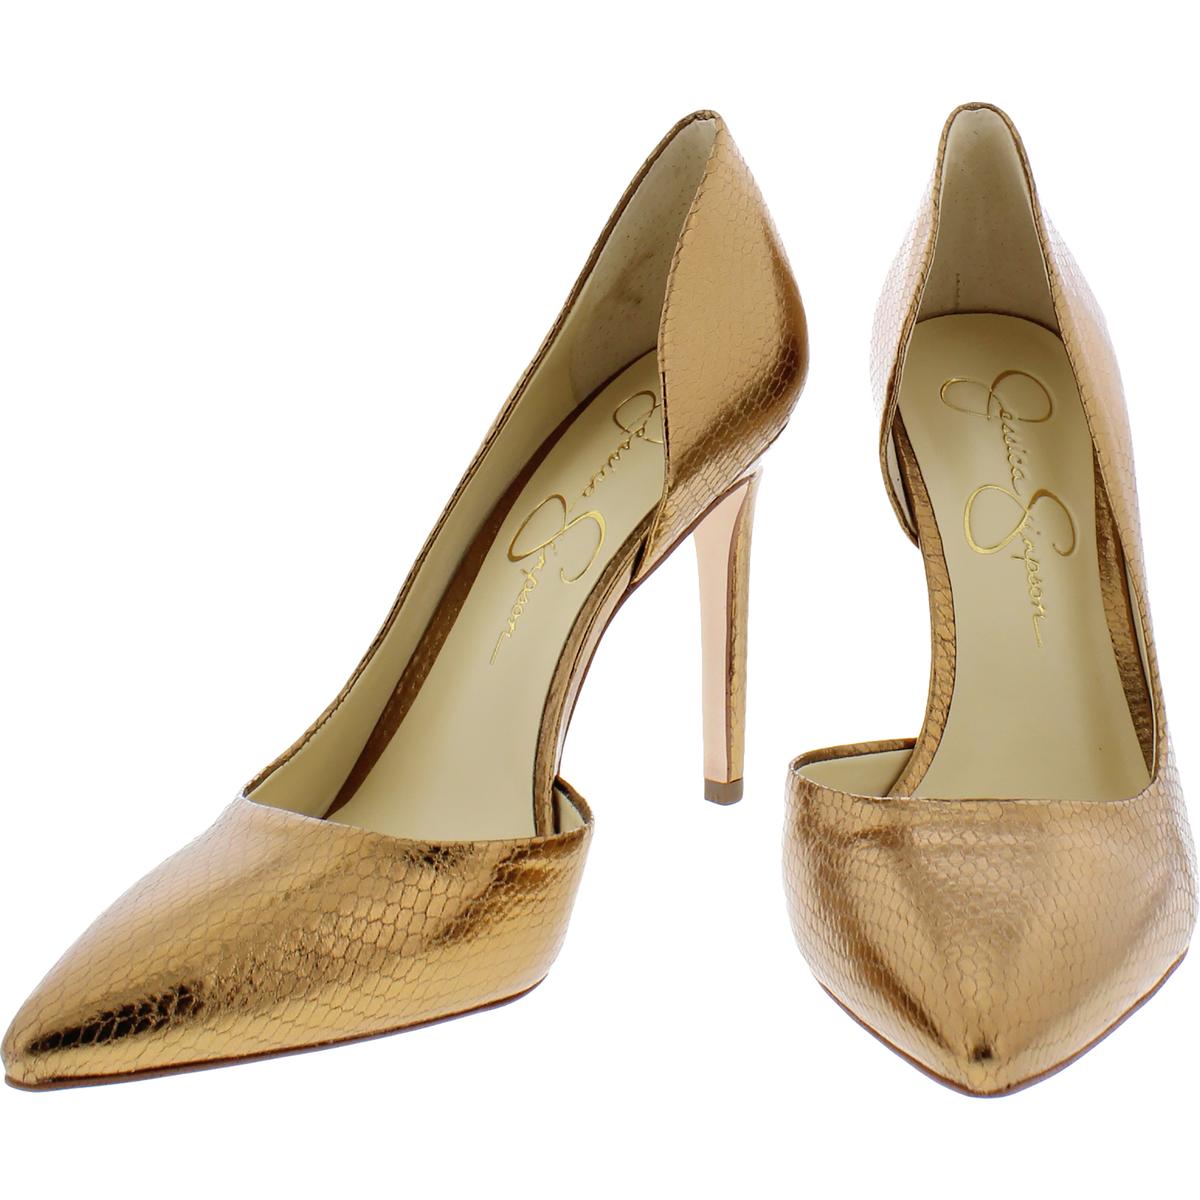 Jessica Simpson Women's Prizma Pointed Toe D'Orsay Heels Pumps | eBay